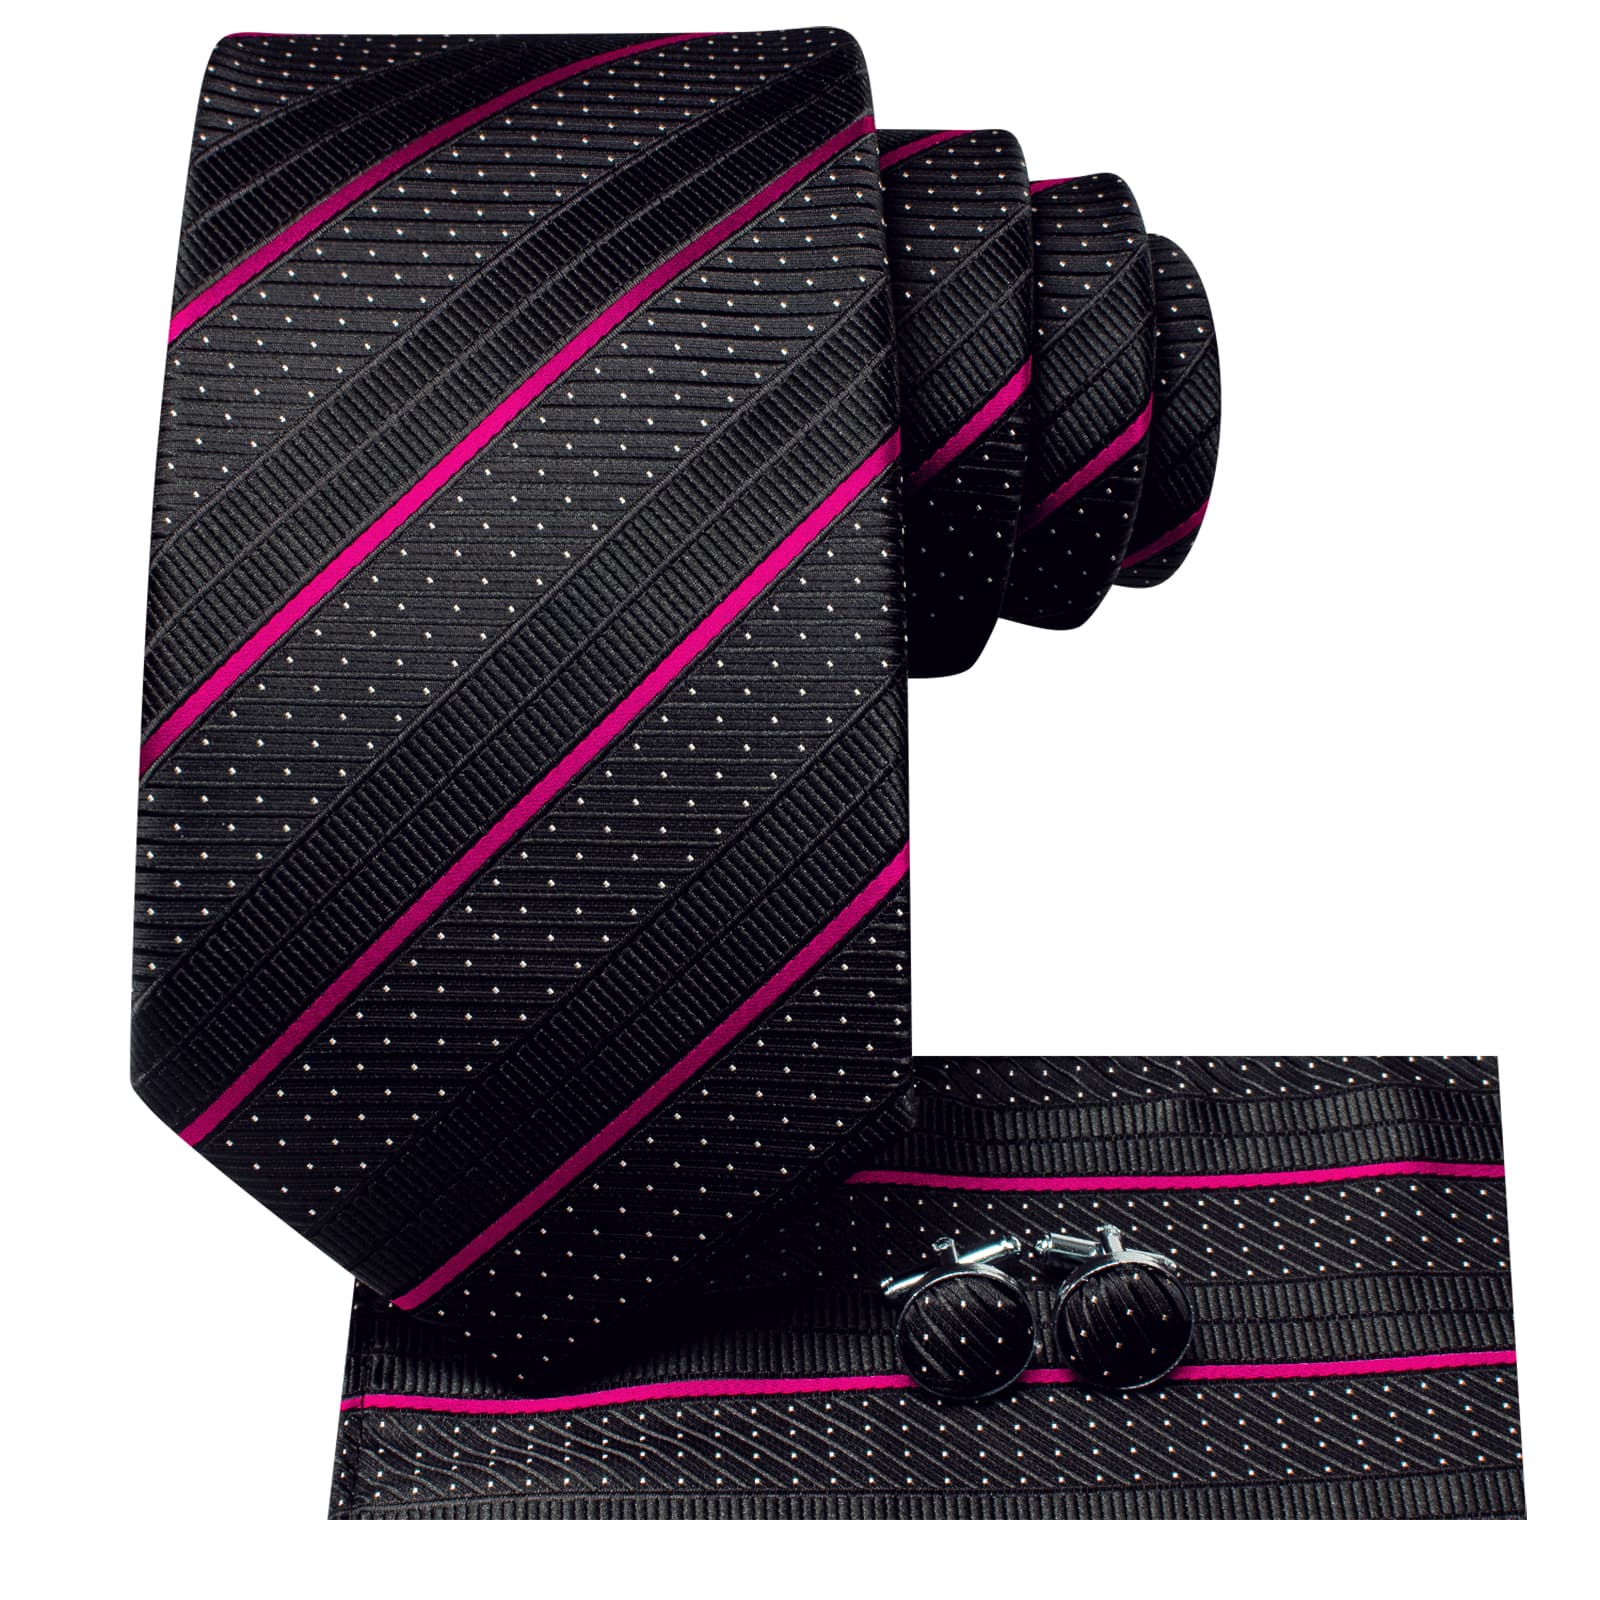 Black tie for wedding 